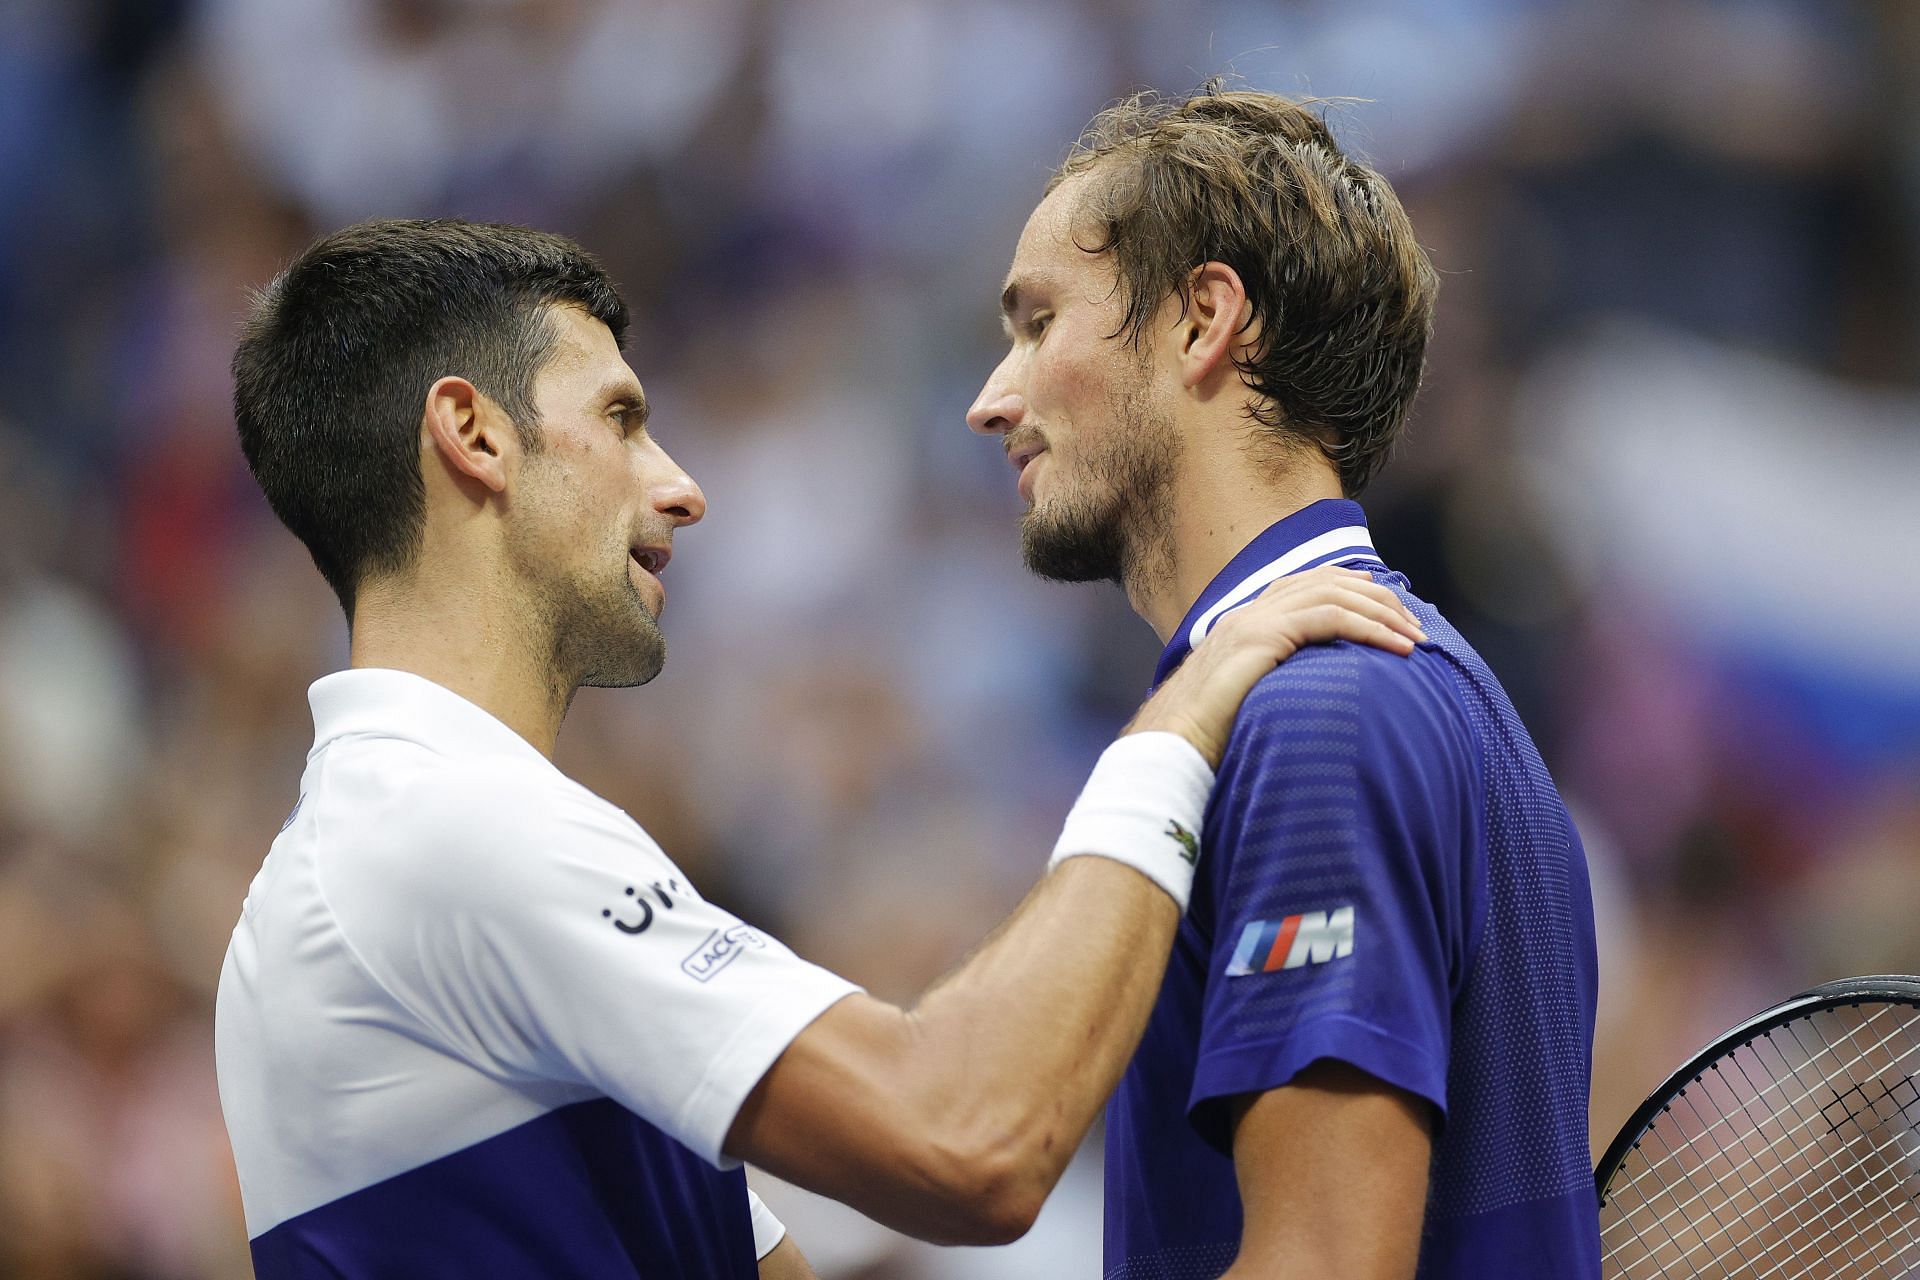 Novak Djokovic will not face Daniil Medvedev before the final